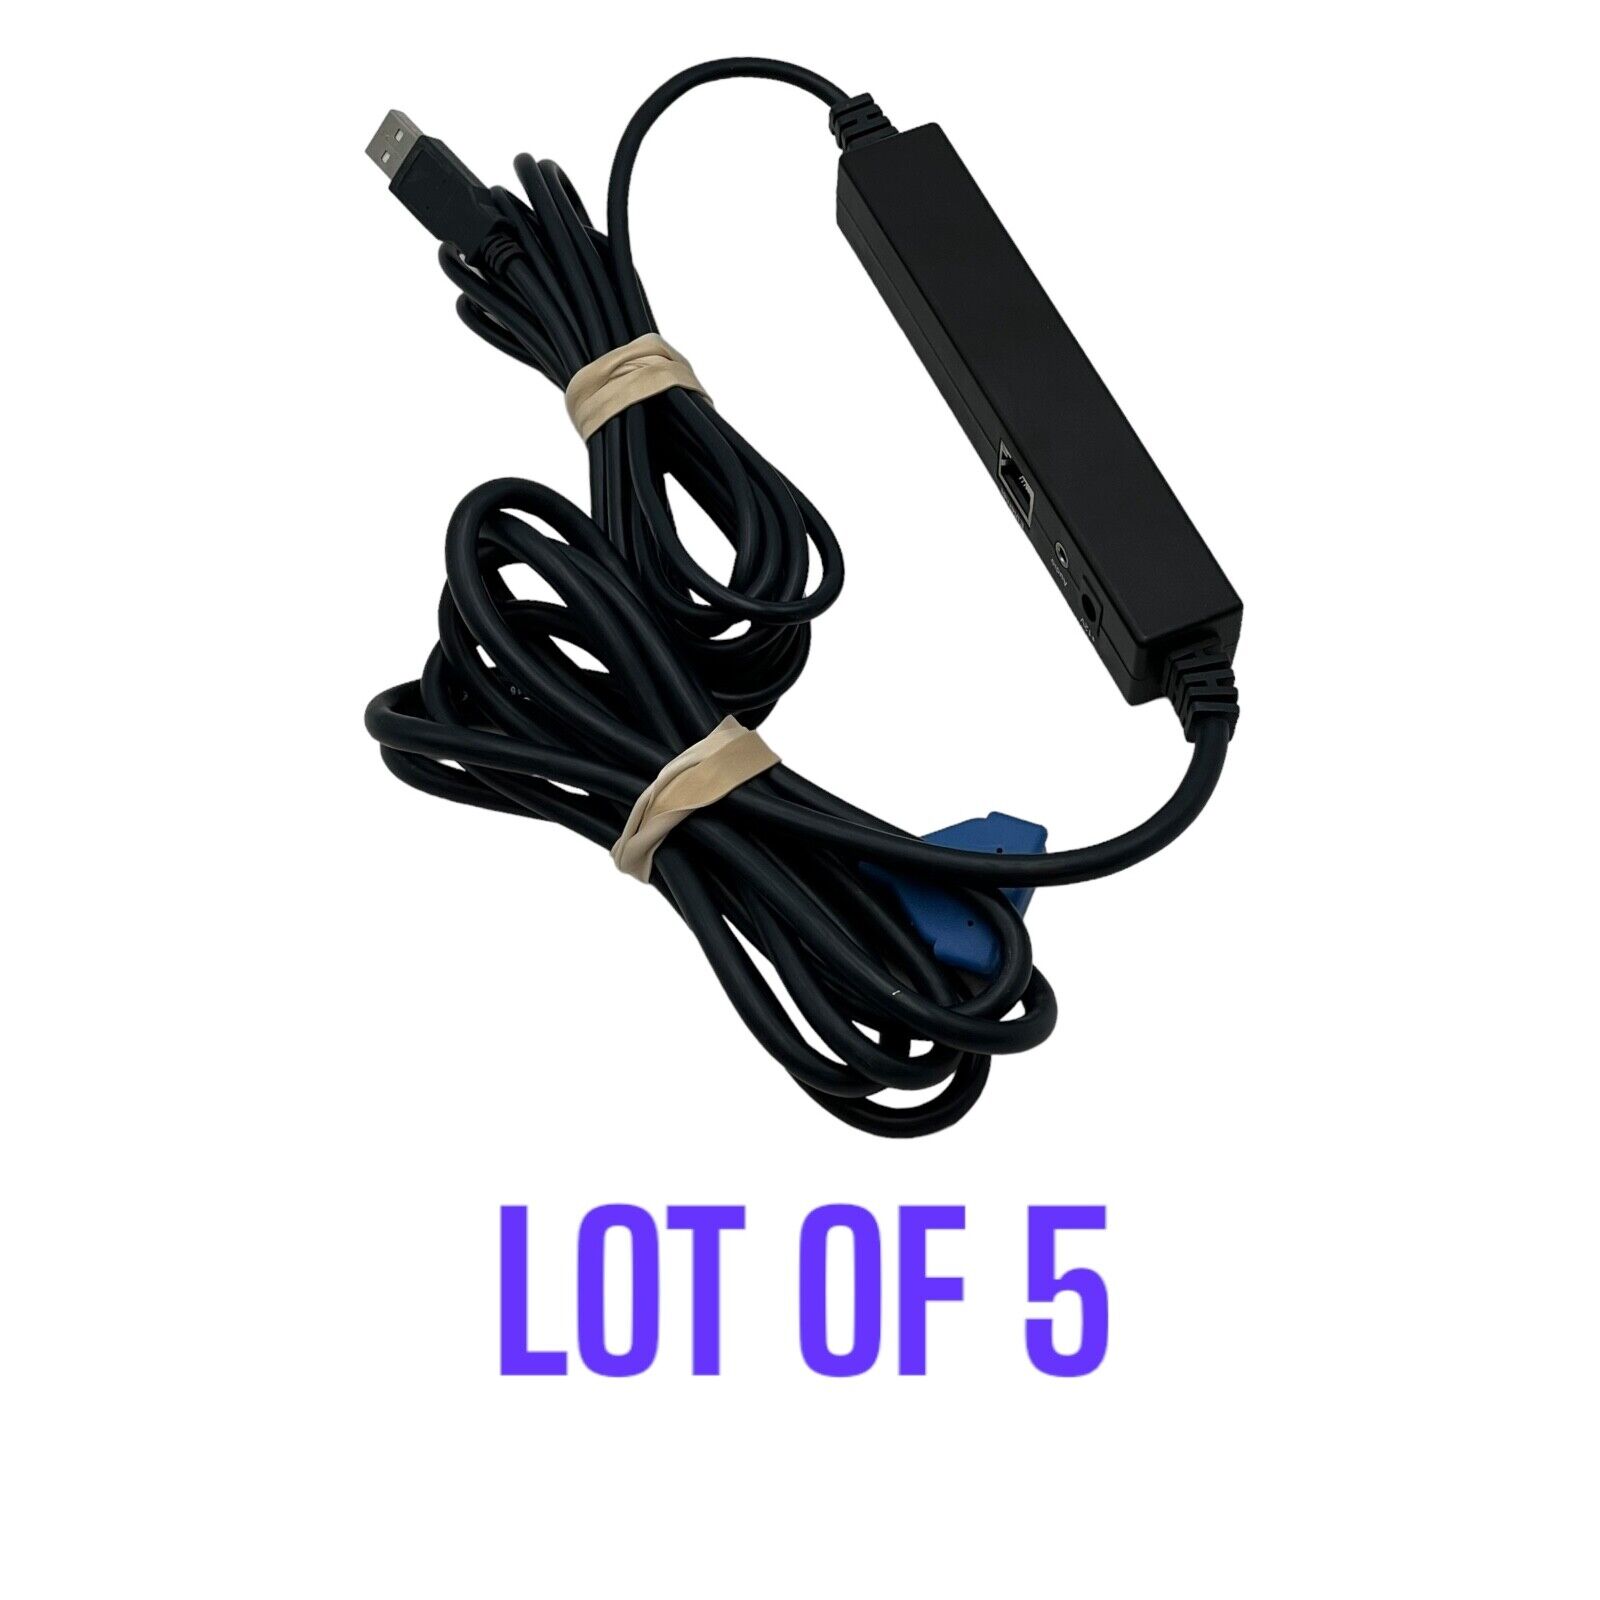 LOT OF 5 Verifone Blue Mx USB Cable P/N 23741-02-R Mx850 Mx860 Mx870 Mx915 Mx925